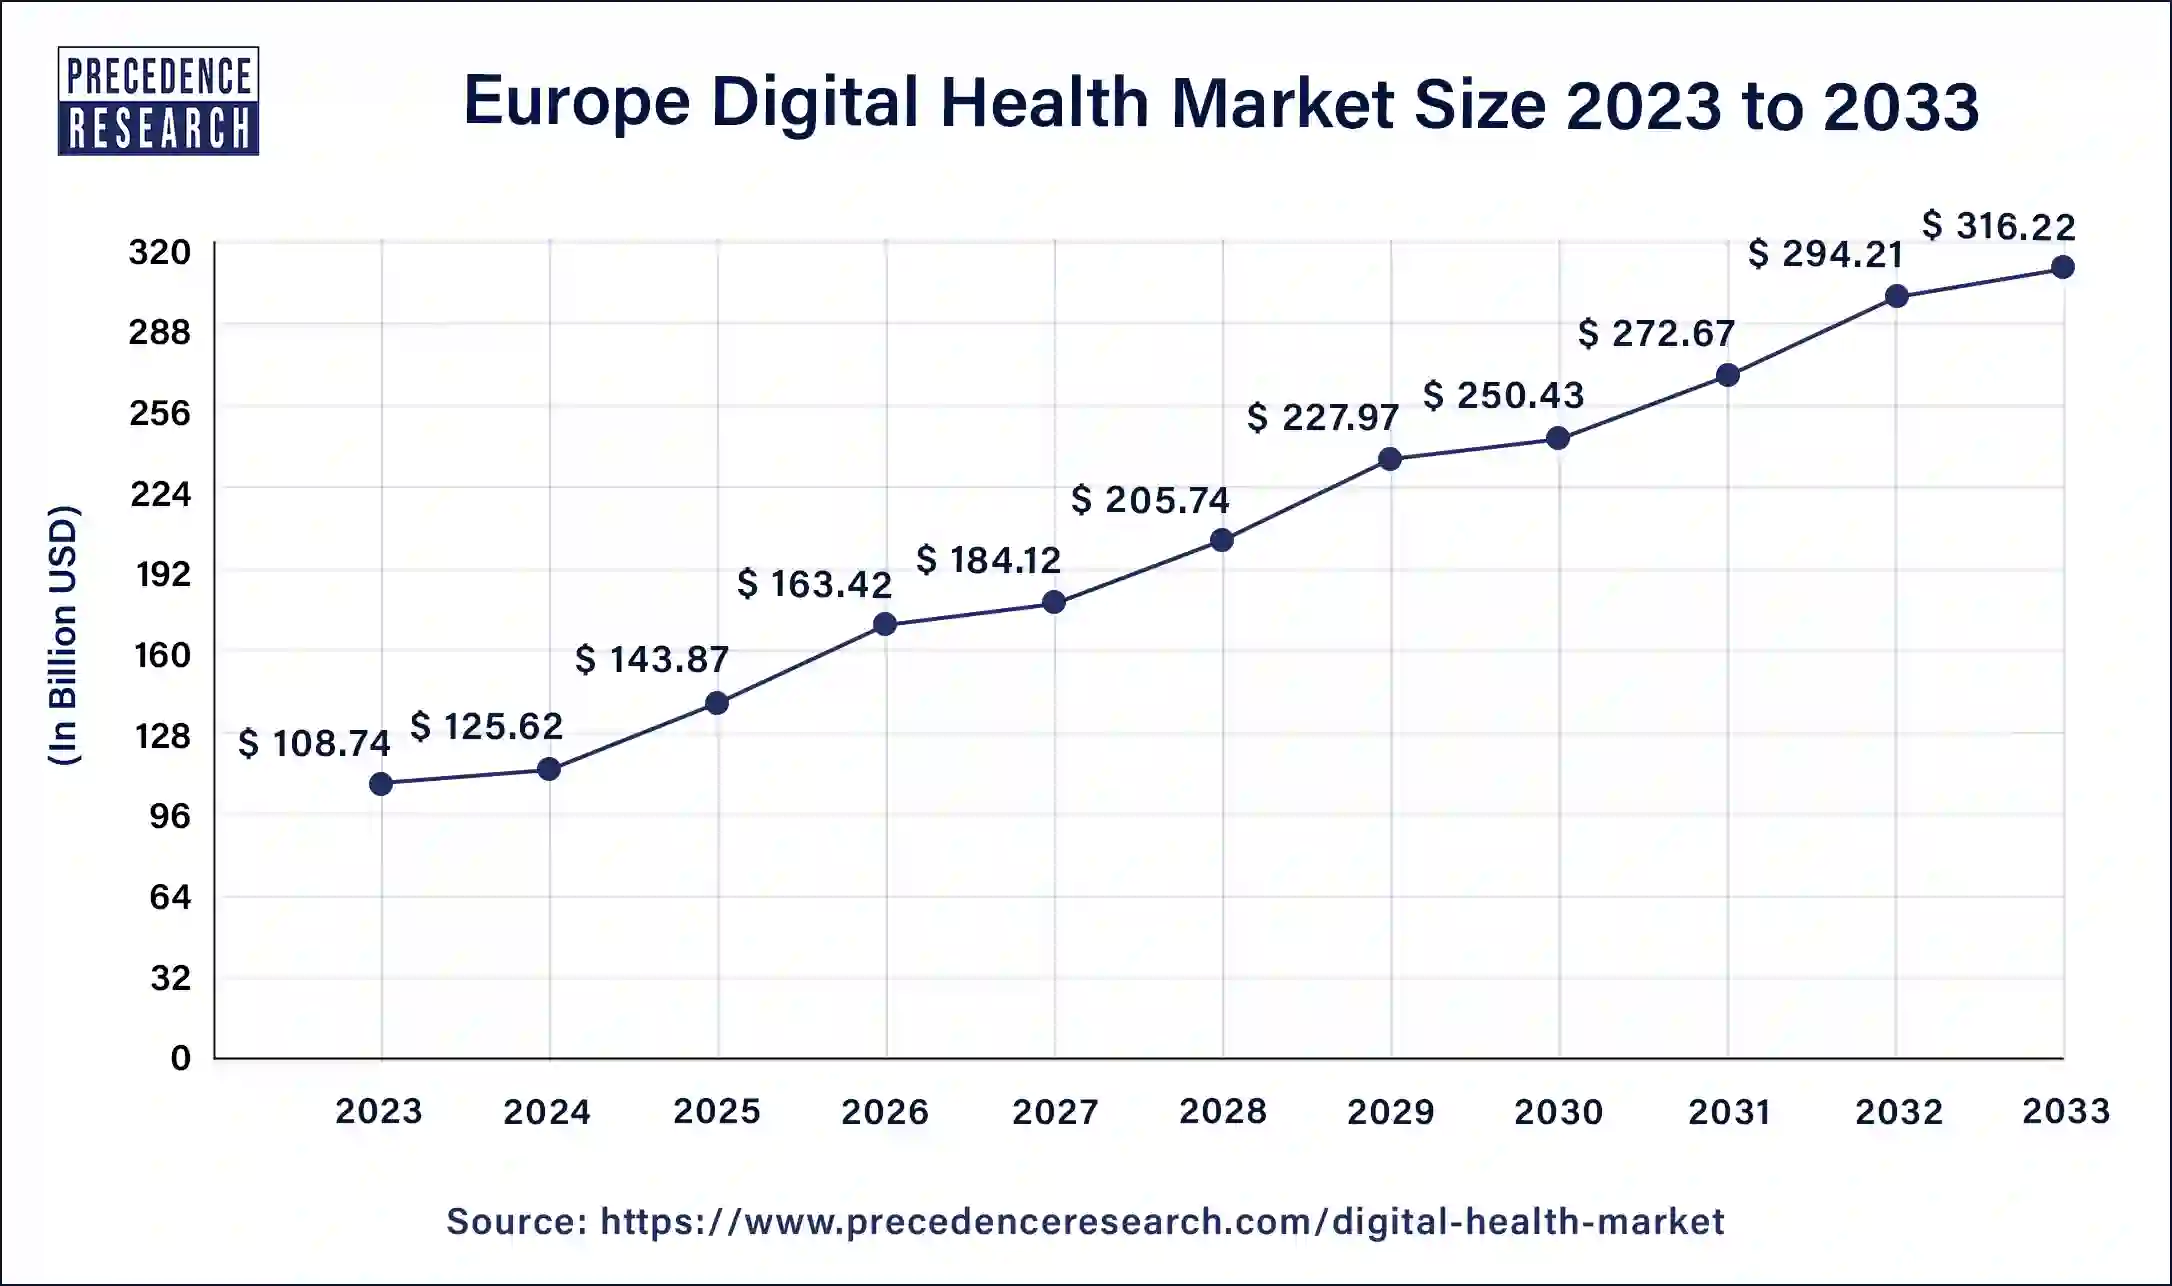 Europe Digital Health Market Size 2024 to 2033